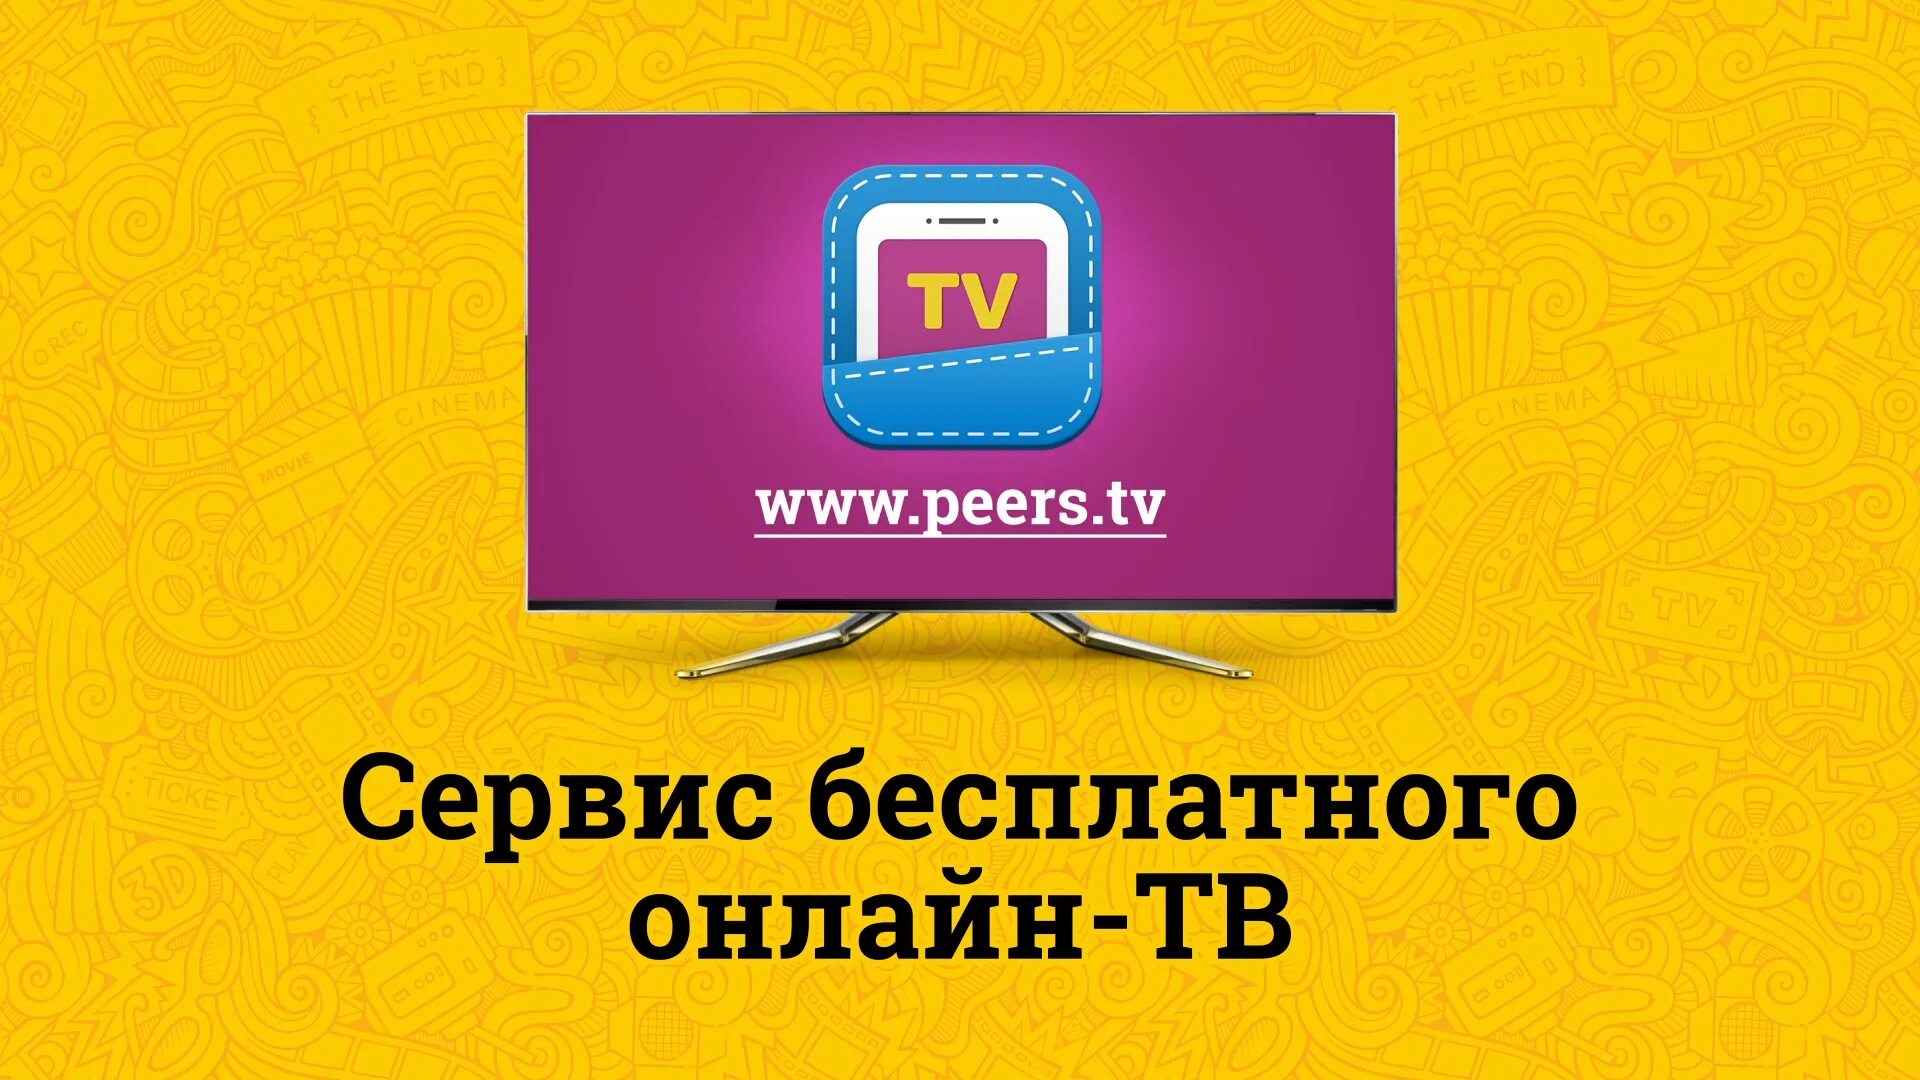 Peers tv на телевизоре. Peers TV. Peers TV логотип. Перс ТВ. Пирс ТВ каналы.